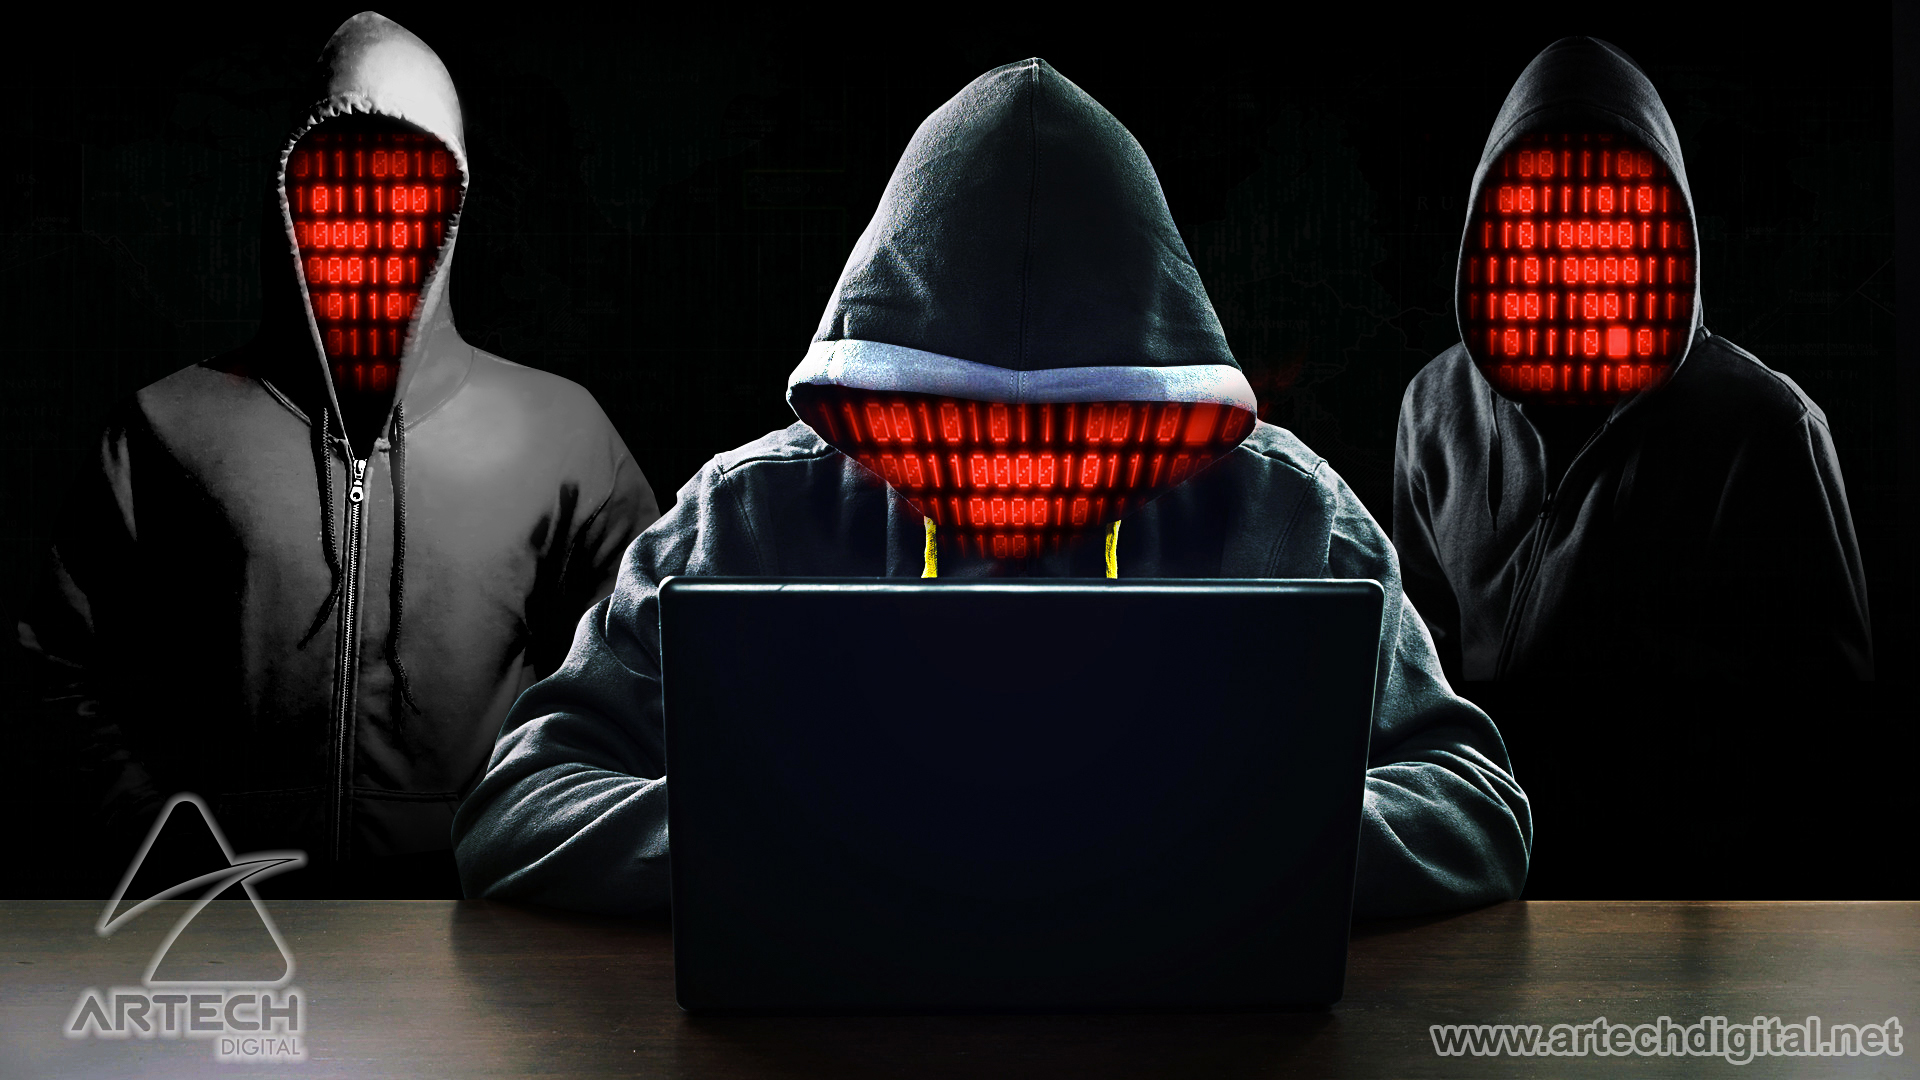 Dile adiós al Criptojacking e implementa seguridad ante ataques de ciberdelincuentes